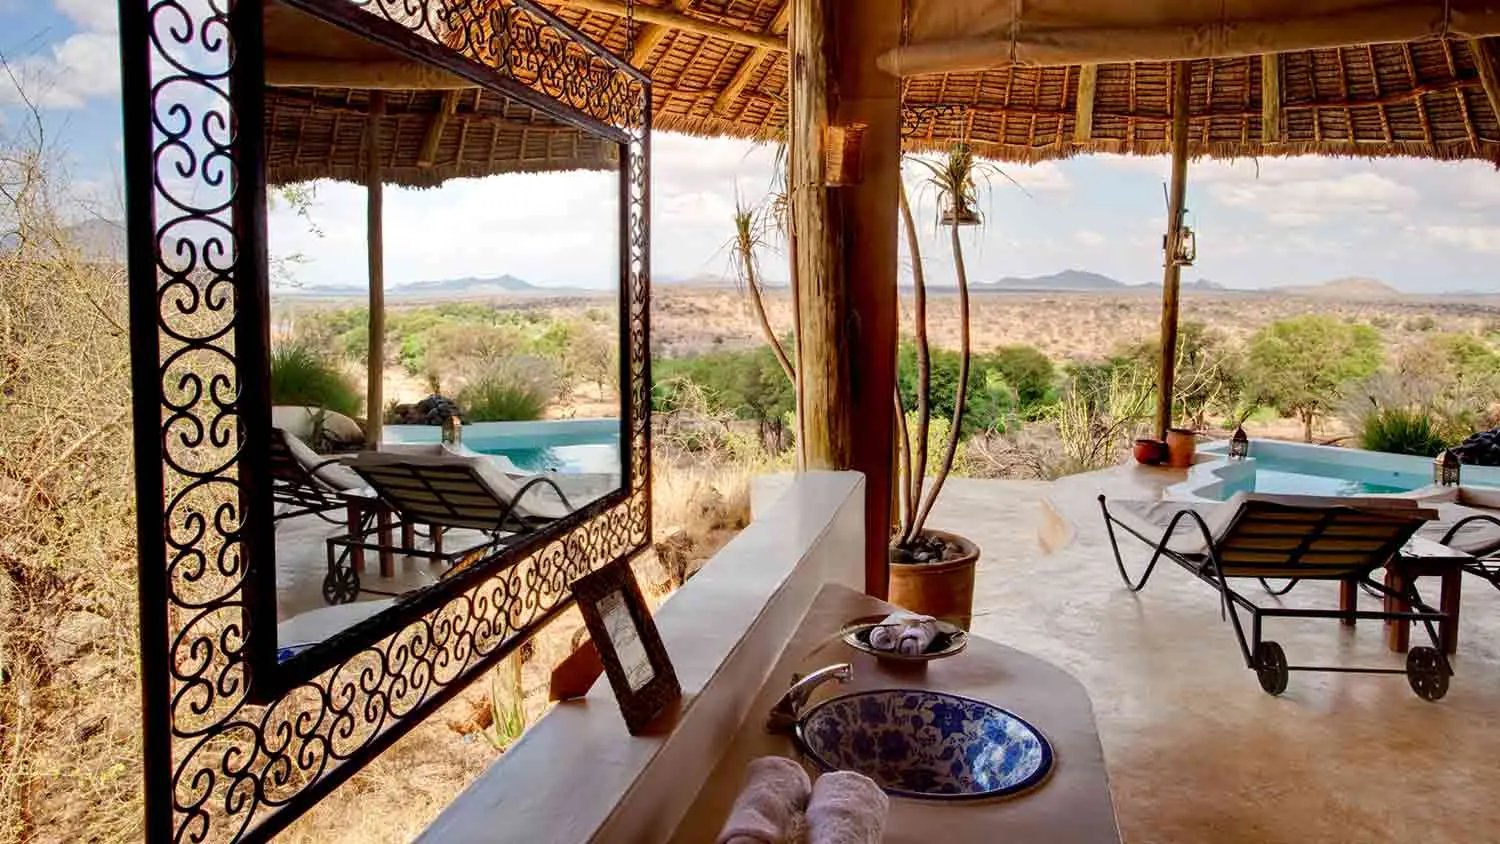 How to choose the best Kenya safari lodges - Sasaab Lodge